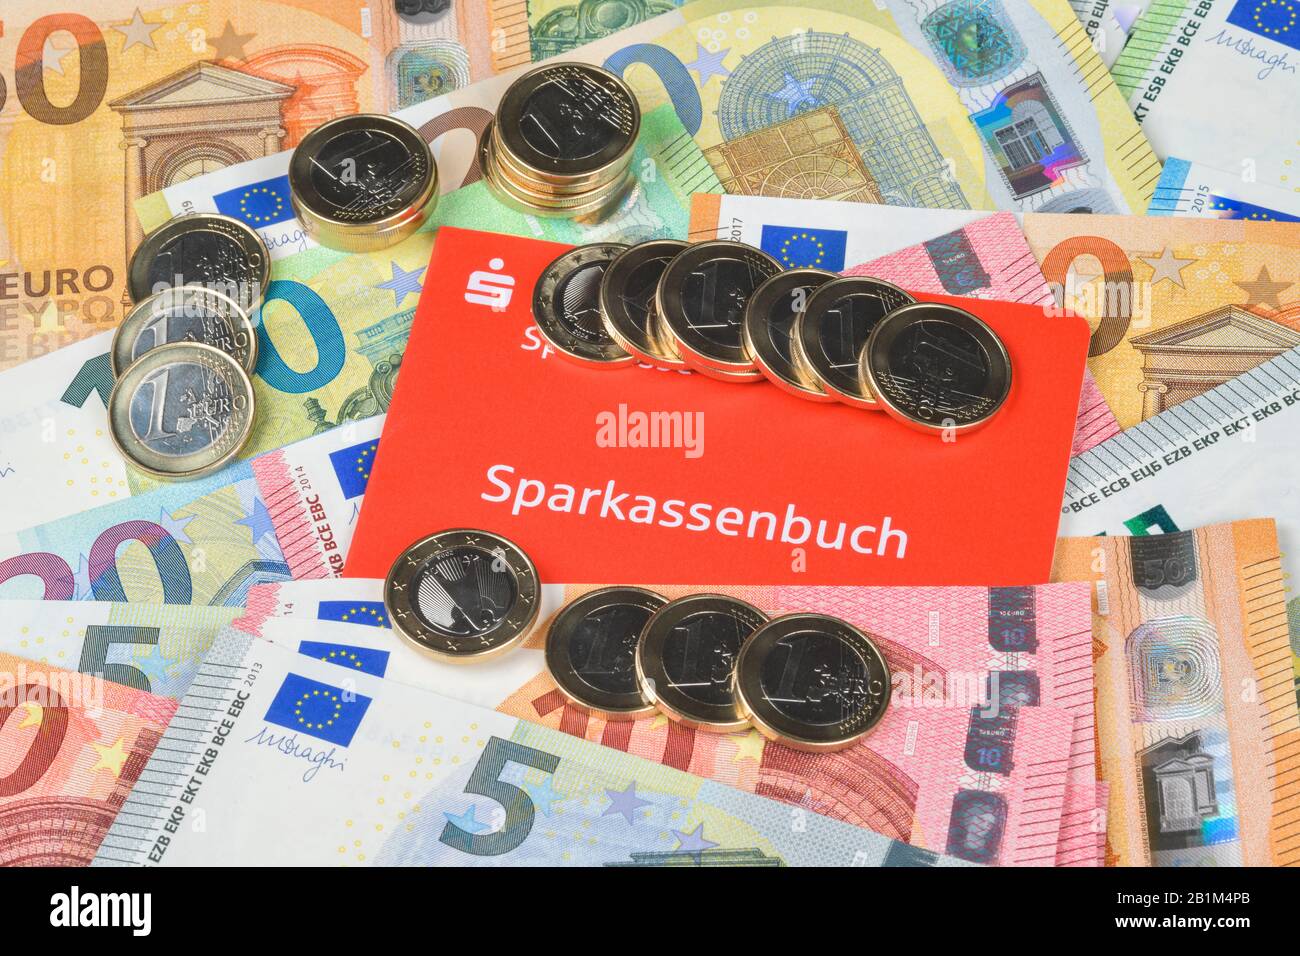 Sparbuch, Geld, Euros, Studioaufnahme Stock Photo